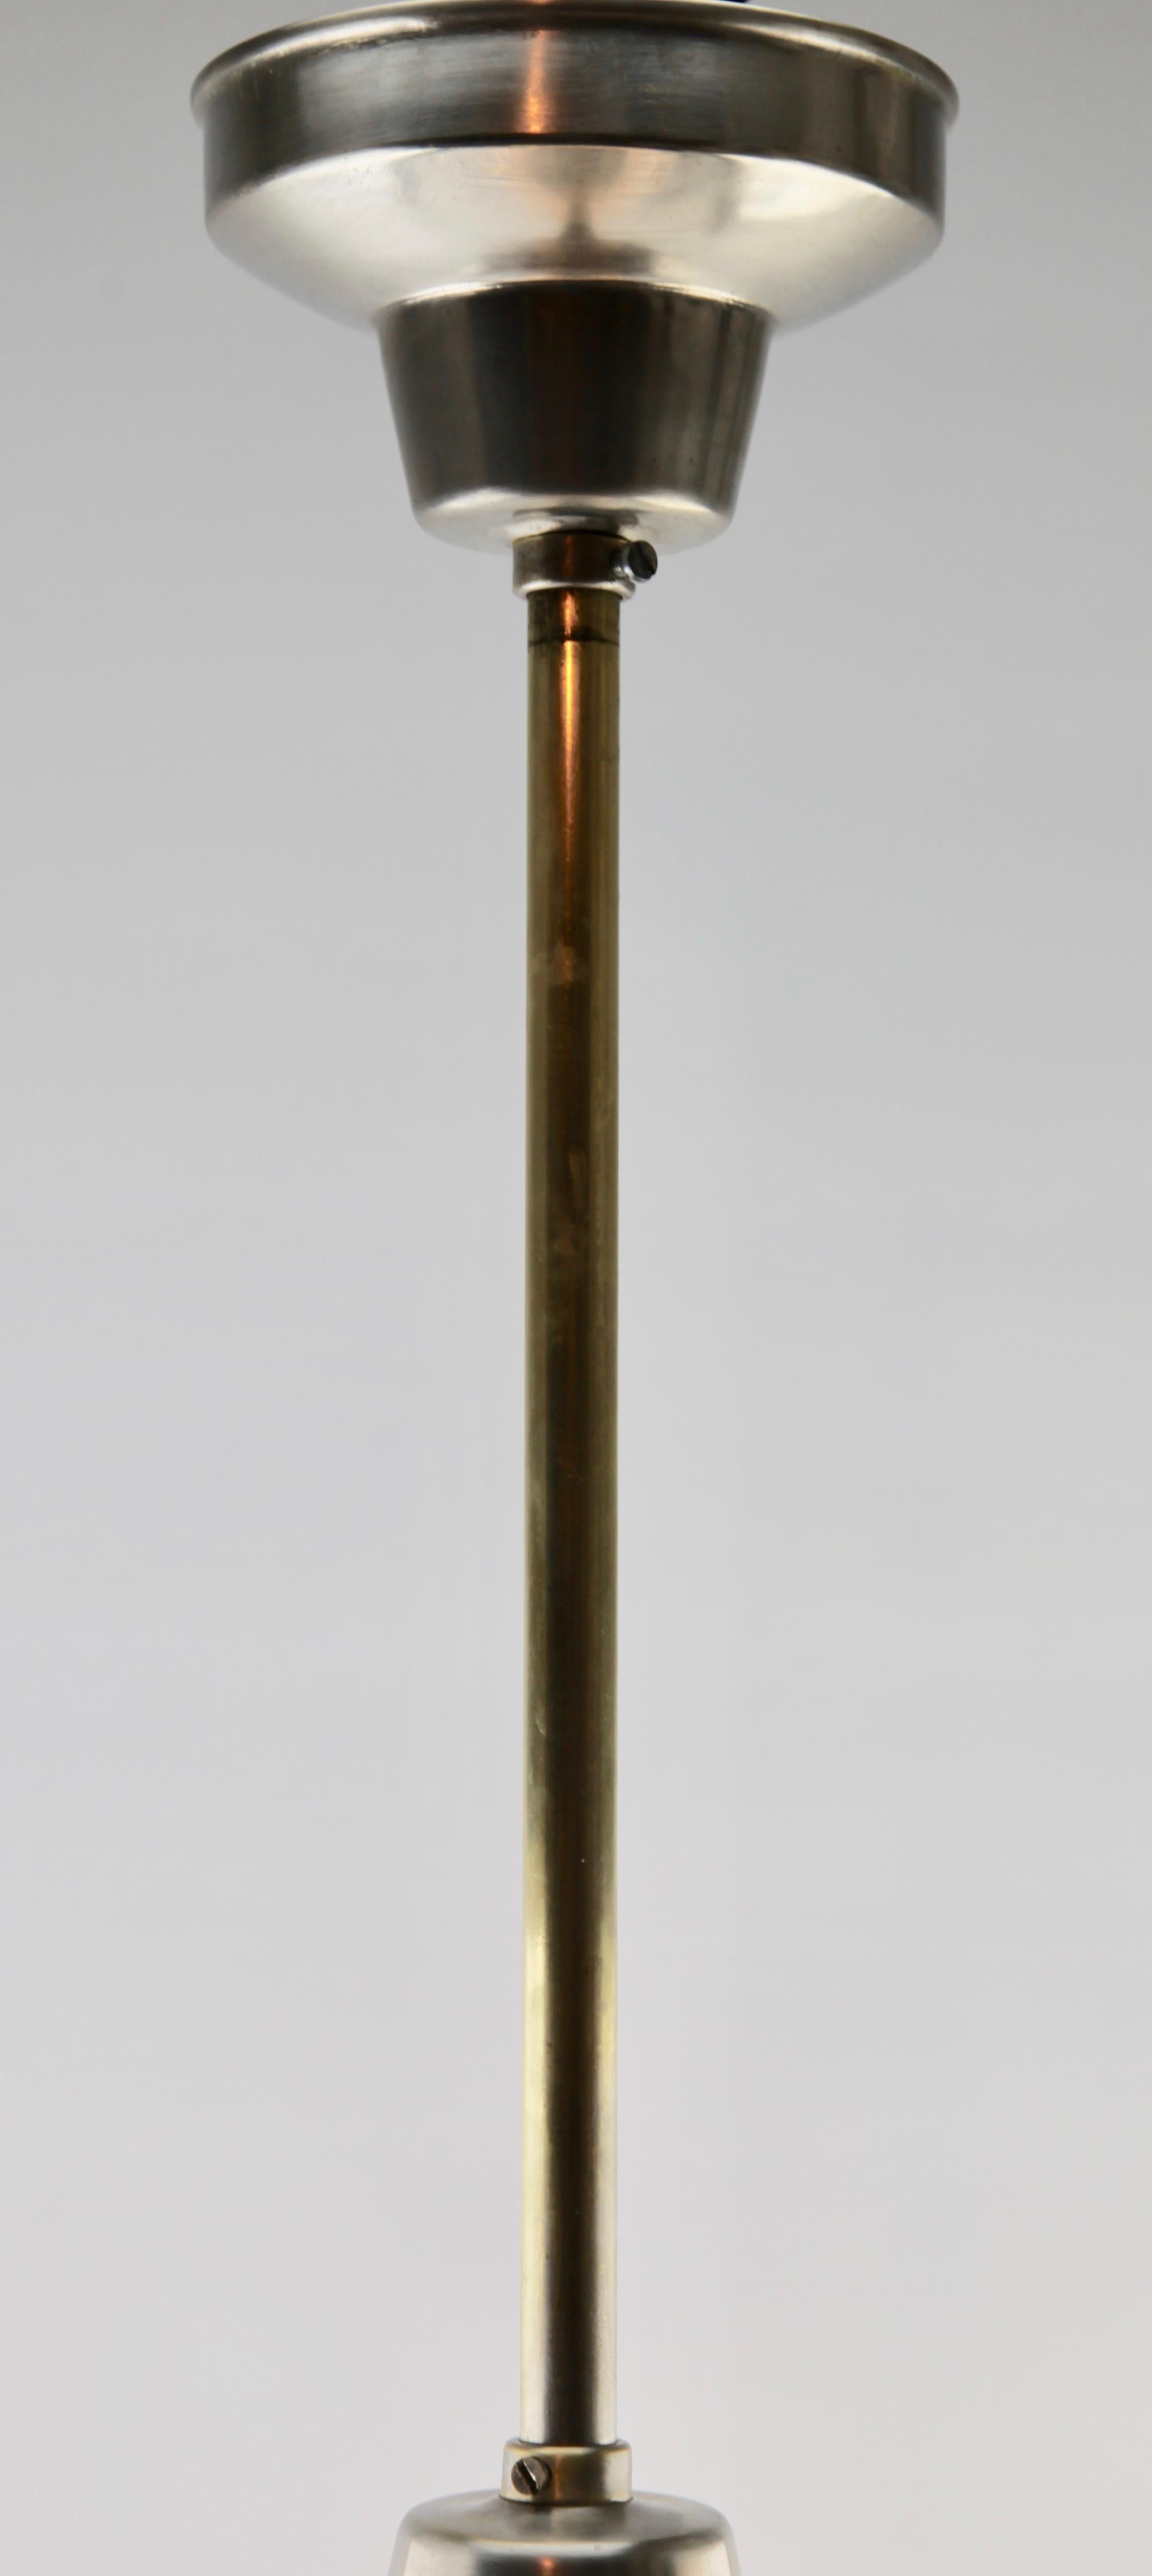 Blown Glass Phillips Pendant Stem Lamp with a Globular Opaline Shade, 1930s, Netherlands